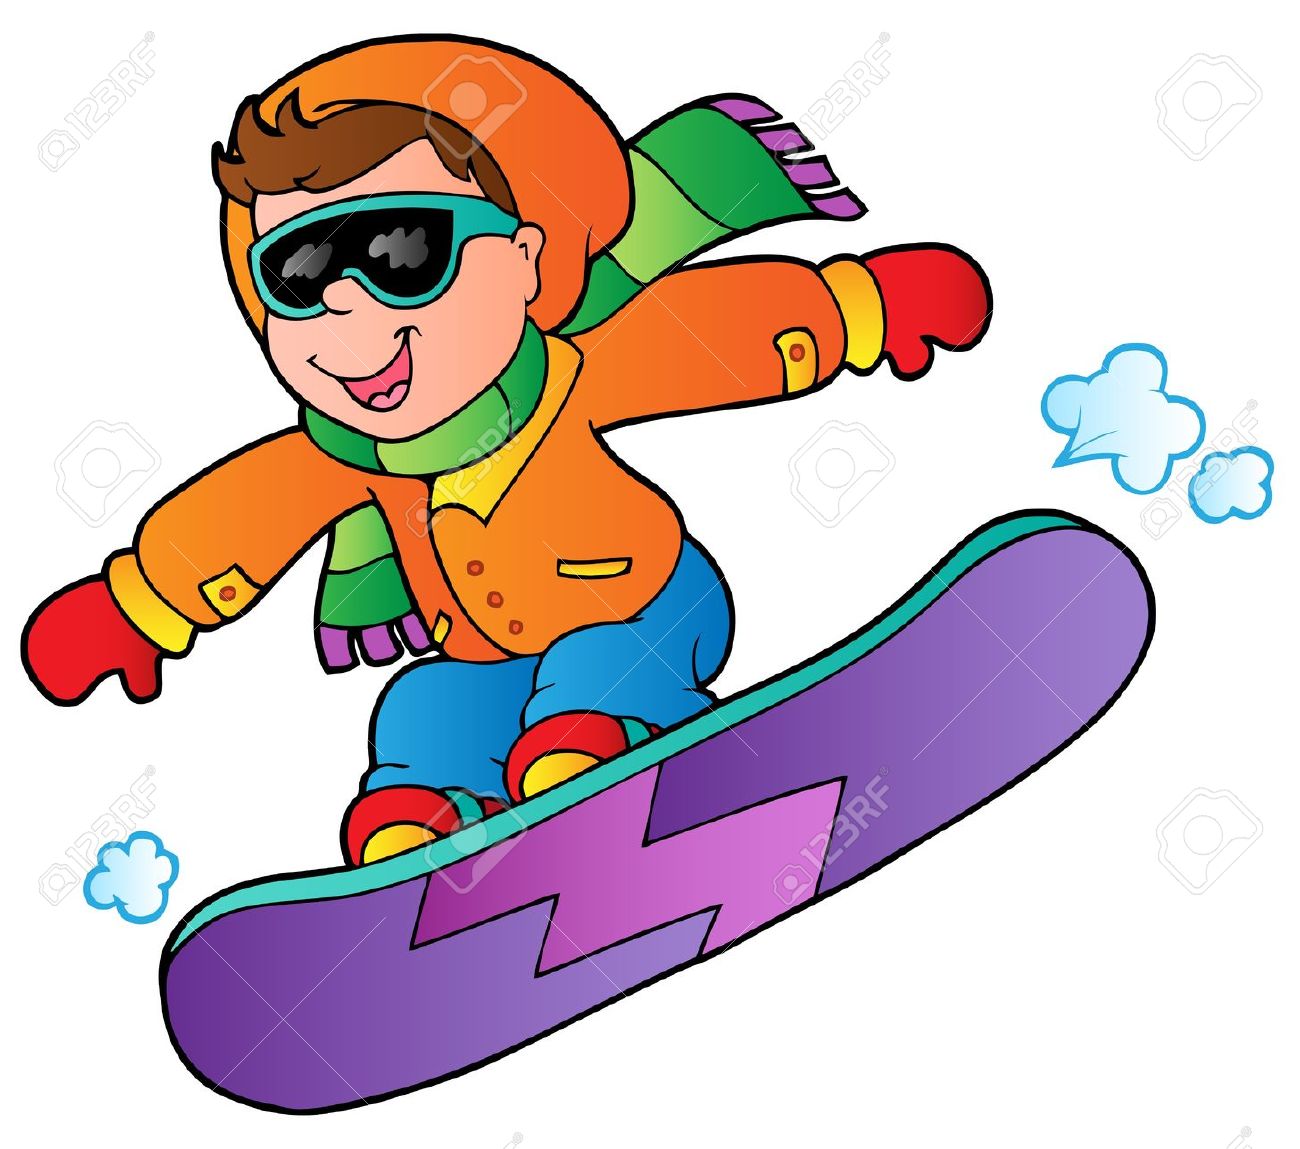 Snowboard clip art Free vecto